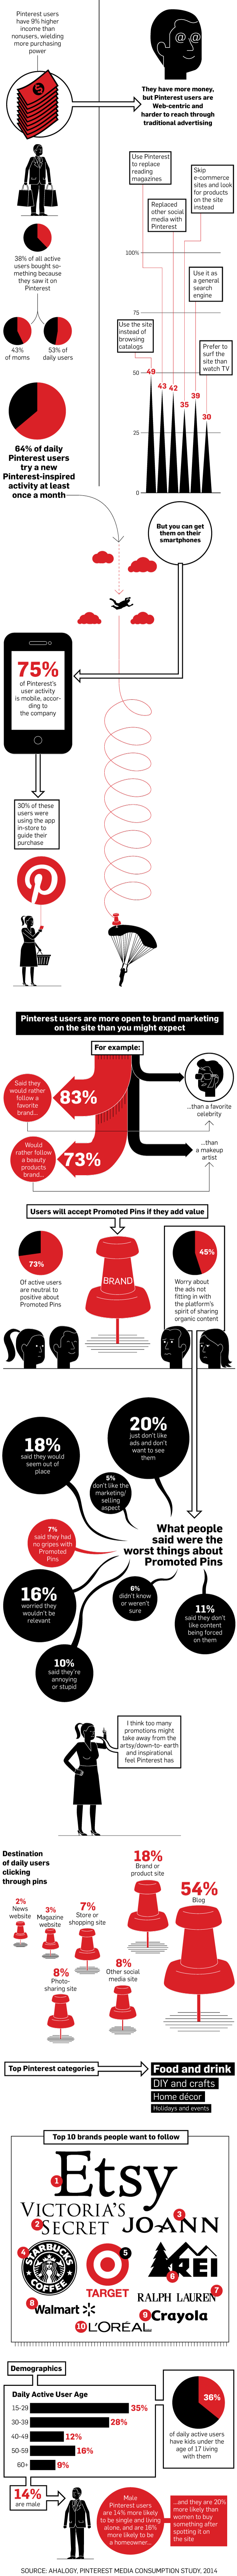 Data Pinterest 2014 infographic